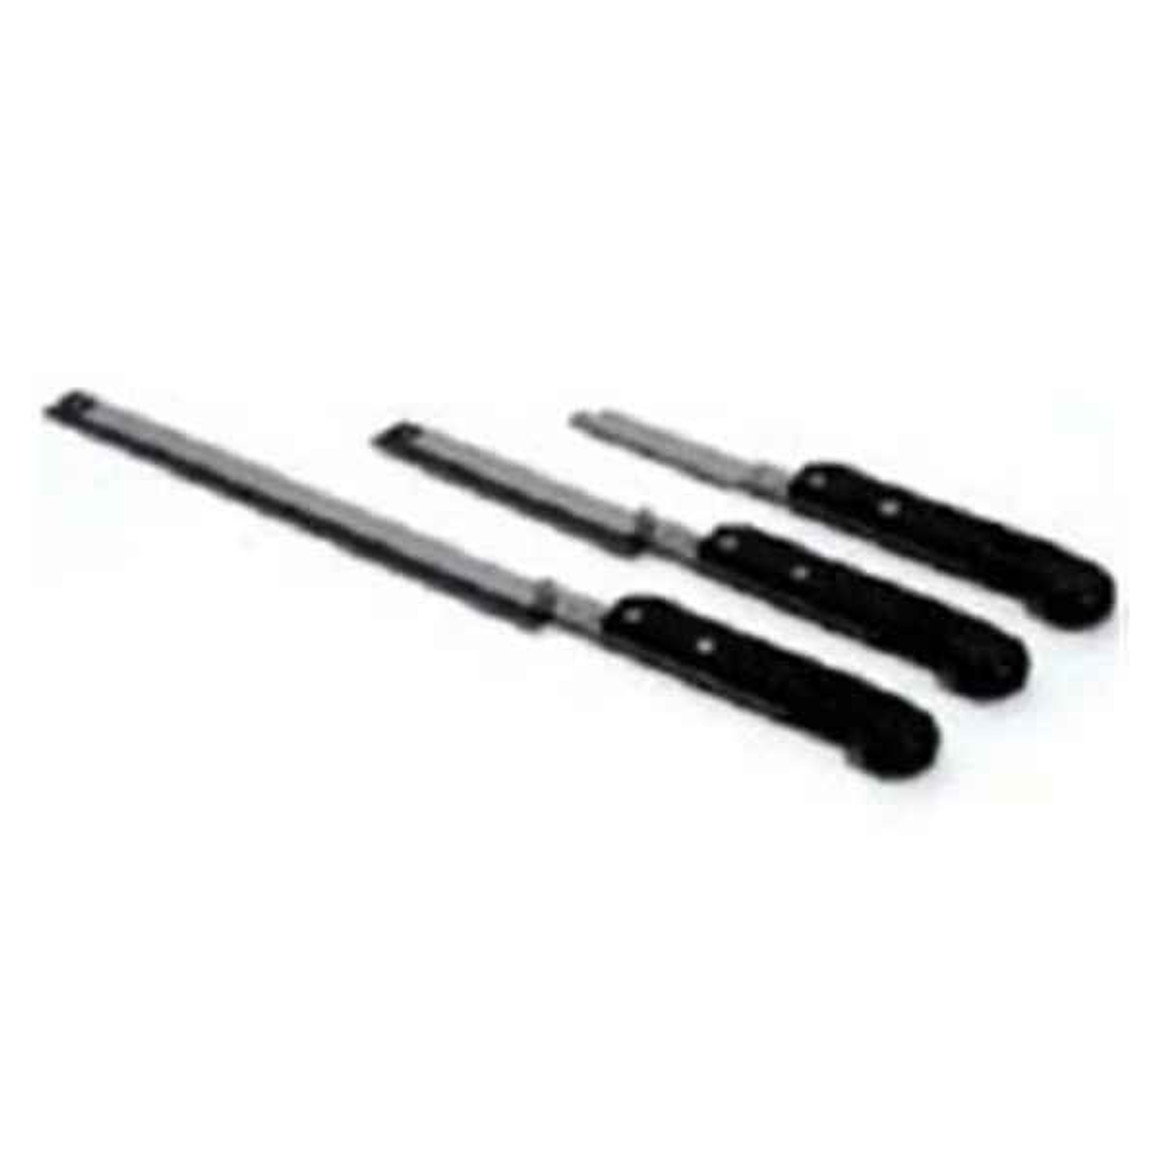 Tissue-Tek® Accu-Edge® Trimming Knife Handles and Disposable Blades, Sakura® Finetek 4785